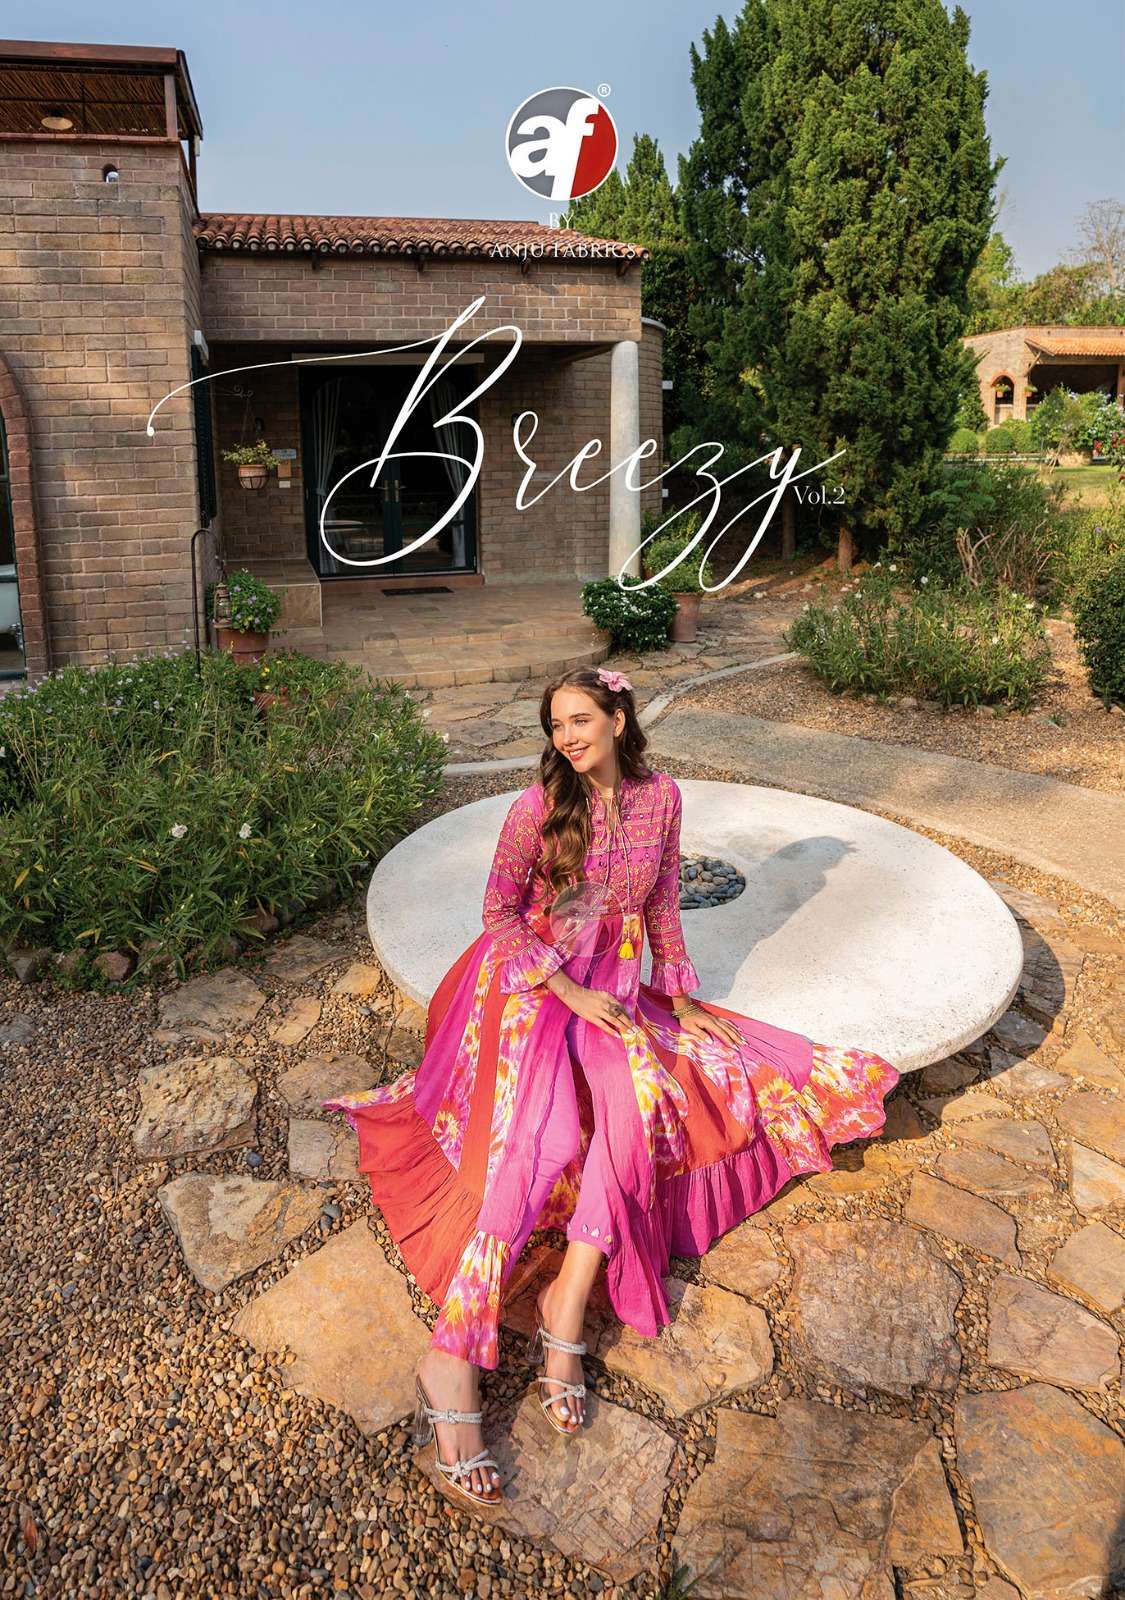 Anju Fabrics Breezy vol -2 Kurti Wholesale catalog